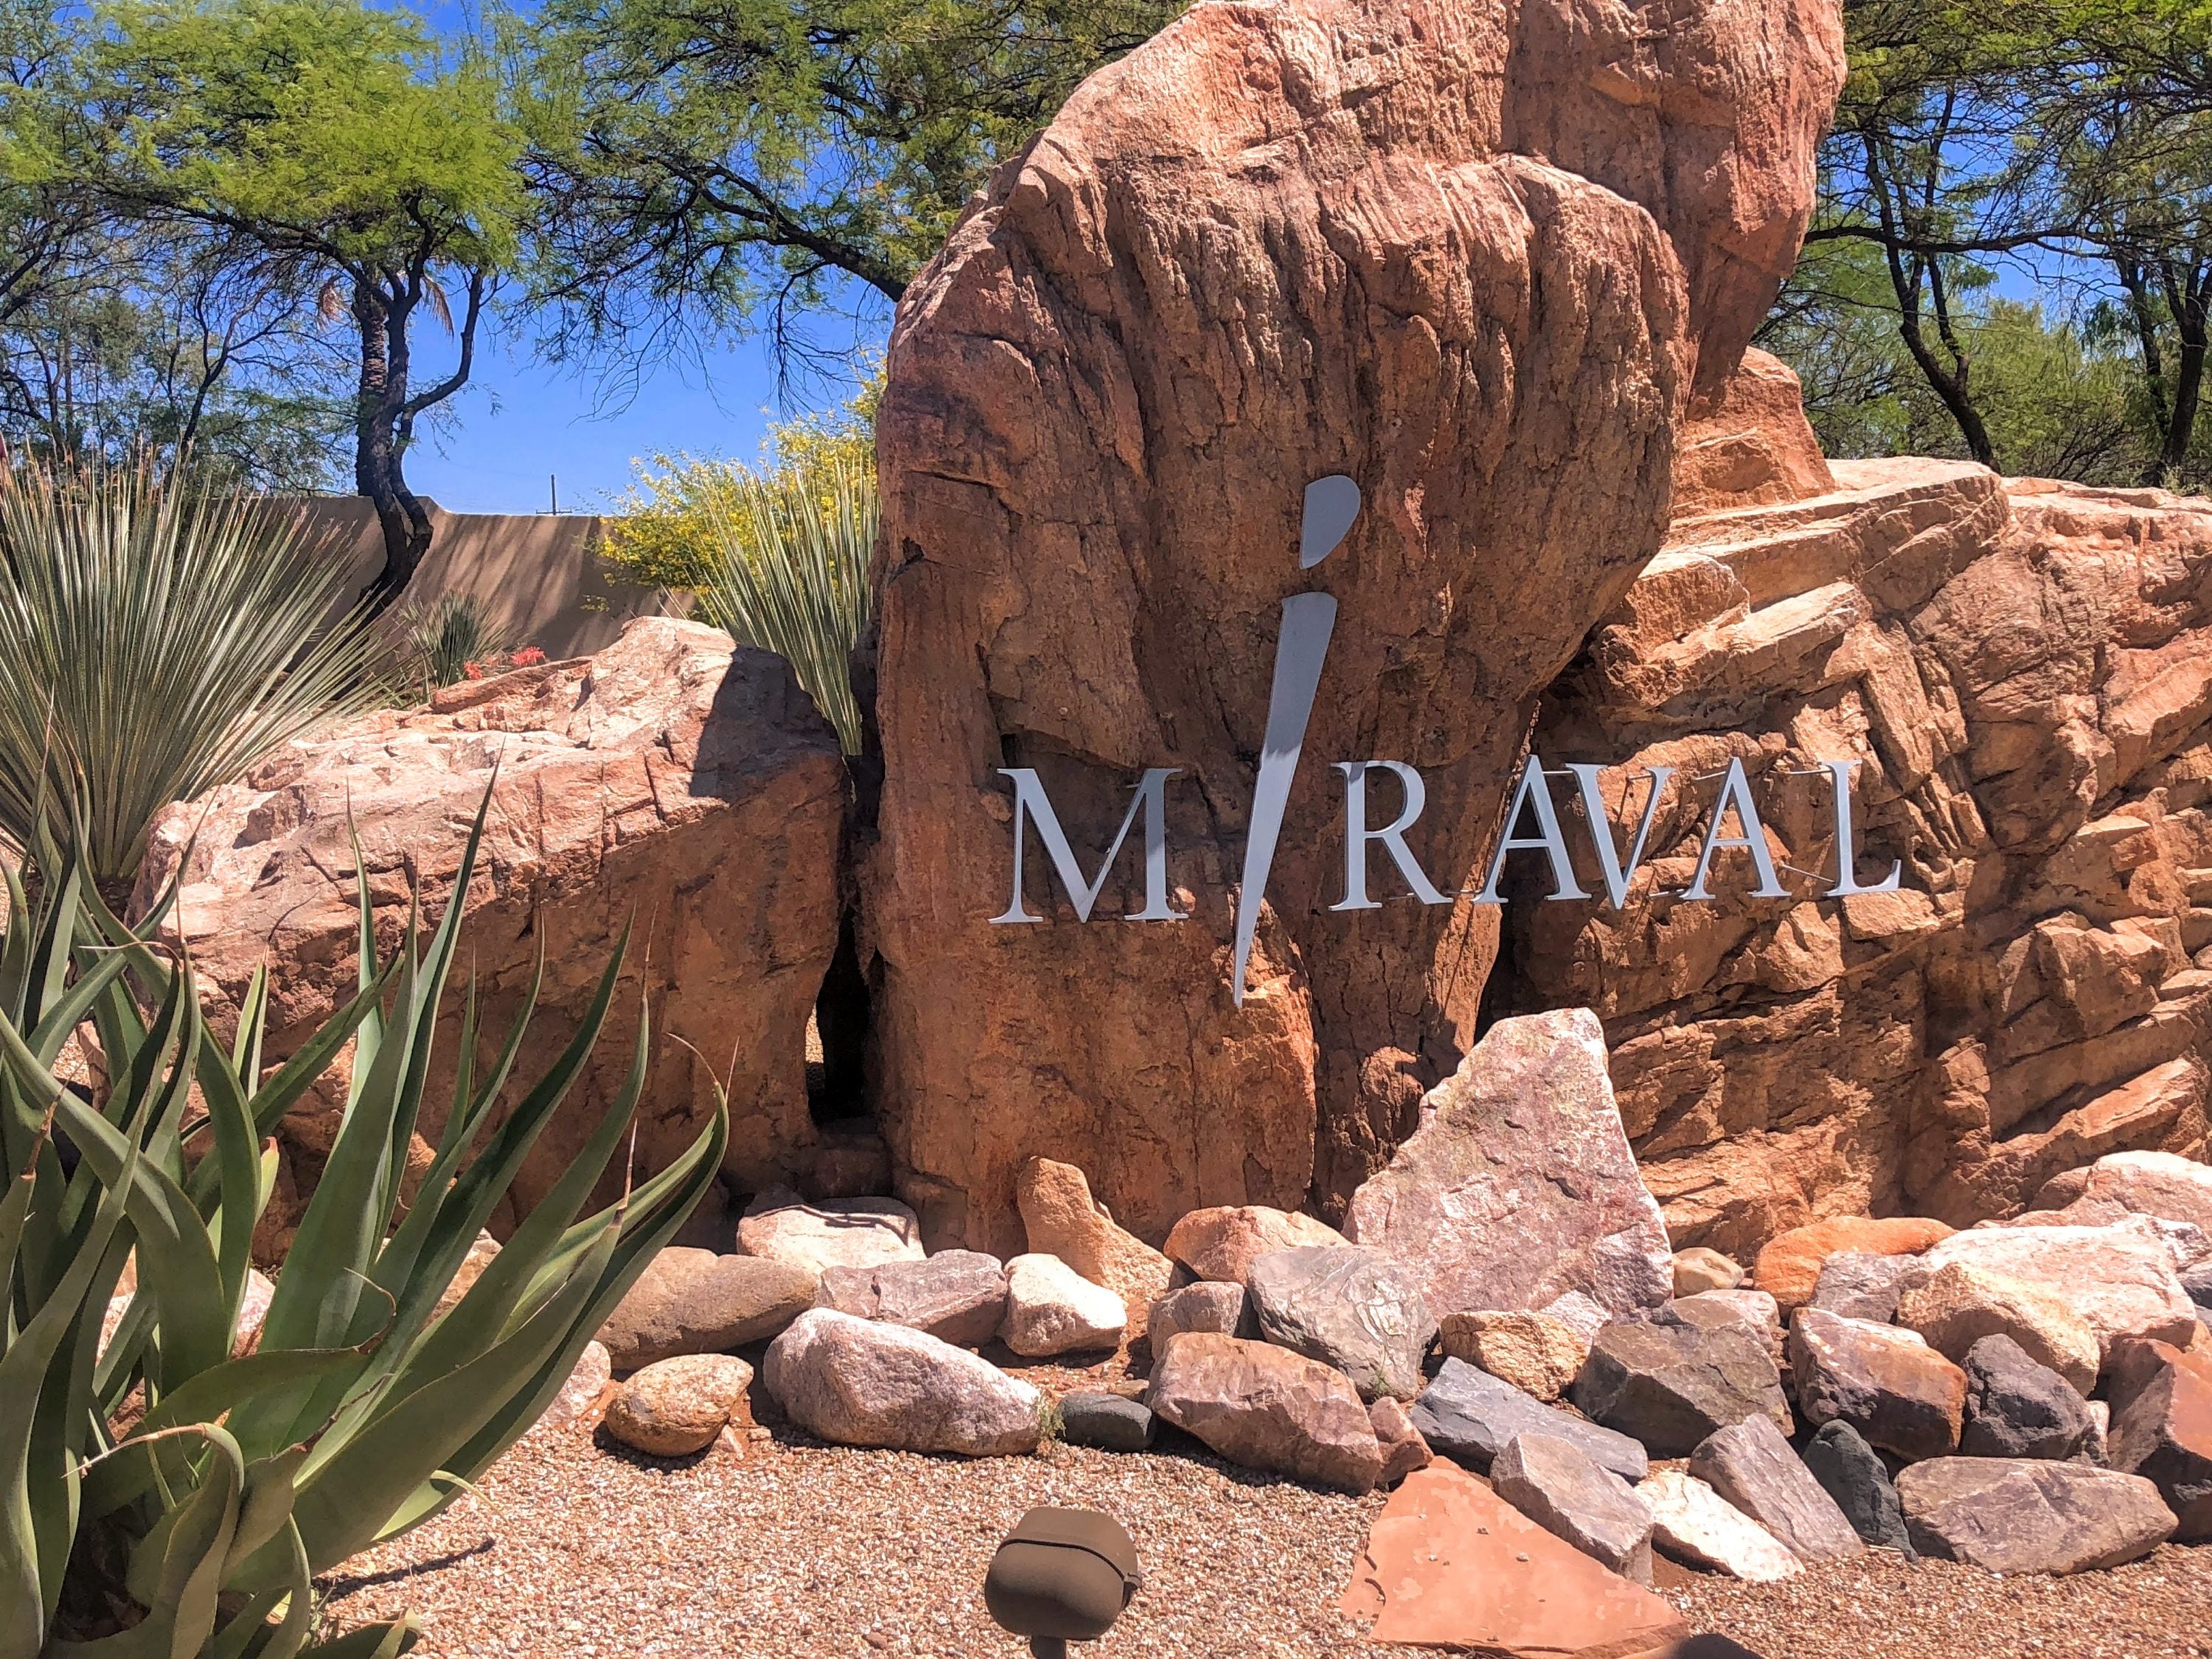 Miraval Arizona front entrance sign